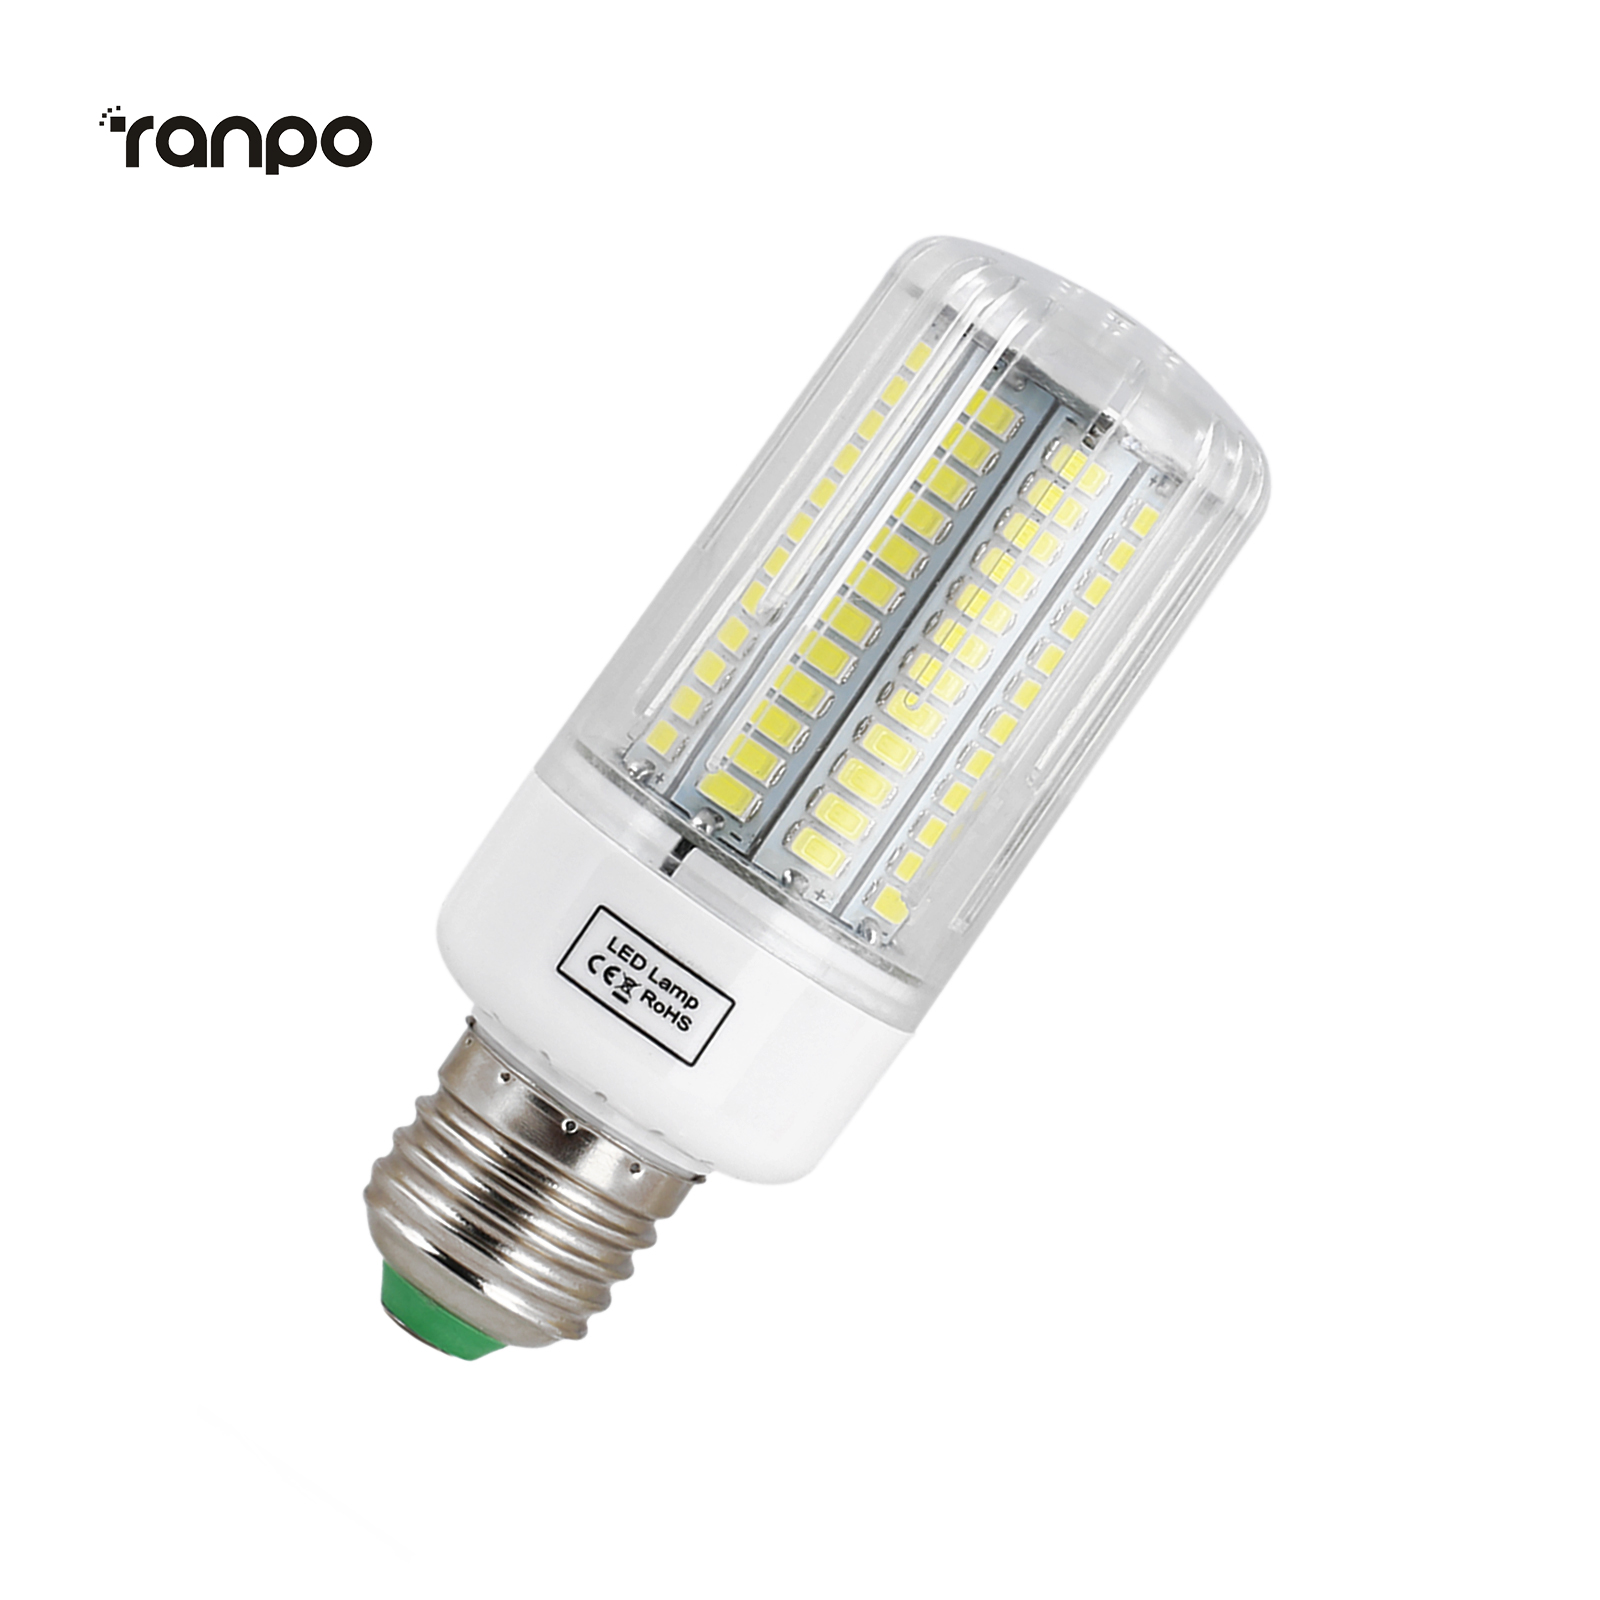 E27 LED Lamp leds Bulb SMD5730 110V Corn Bulb 24 30 42 64 80 89 108 136 165LEDs Chandelier Candle LED Light For Home Decoration